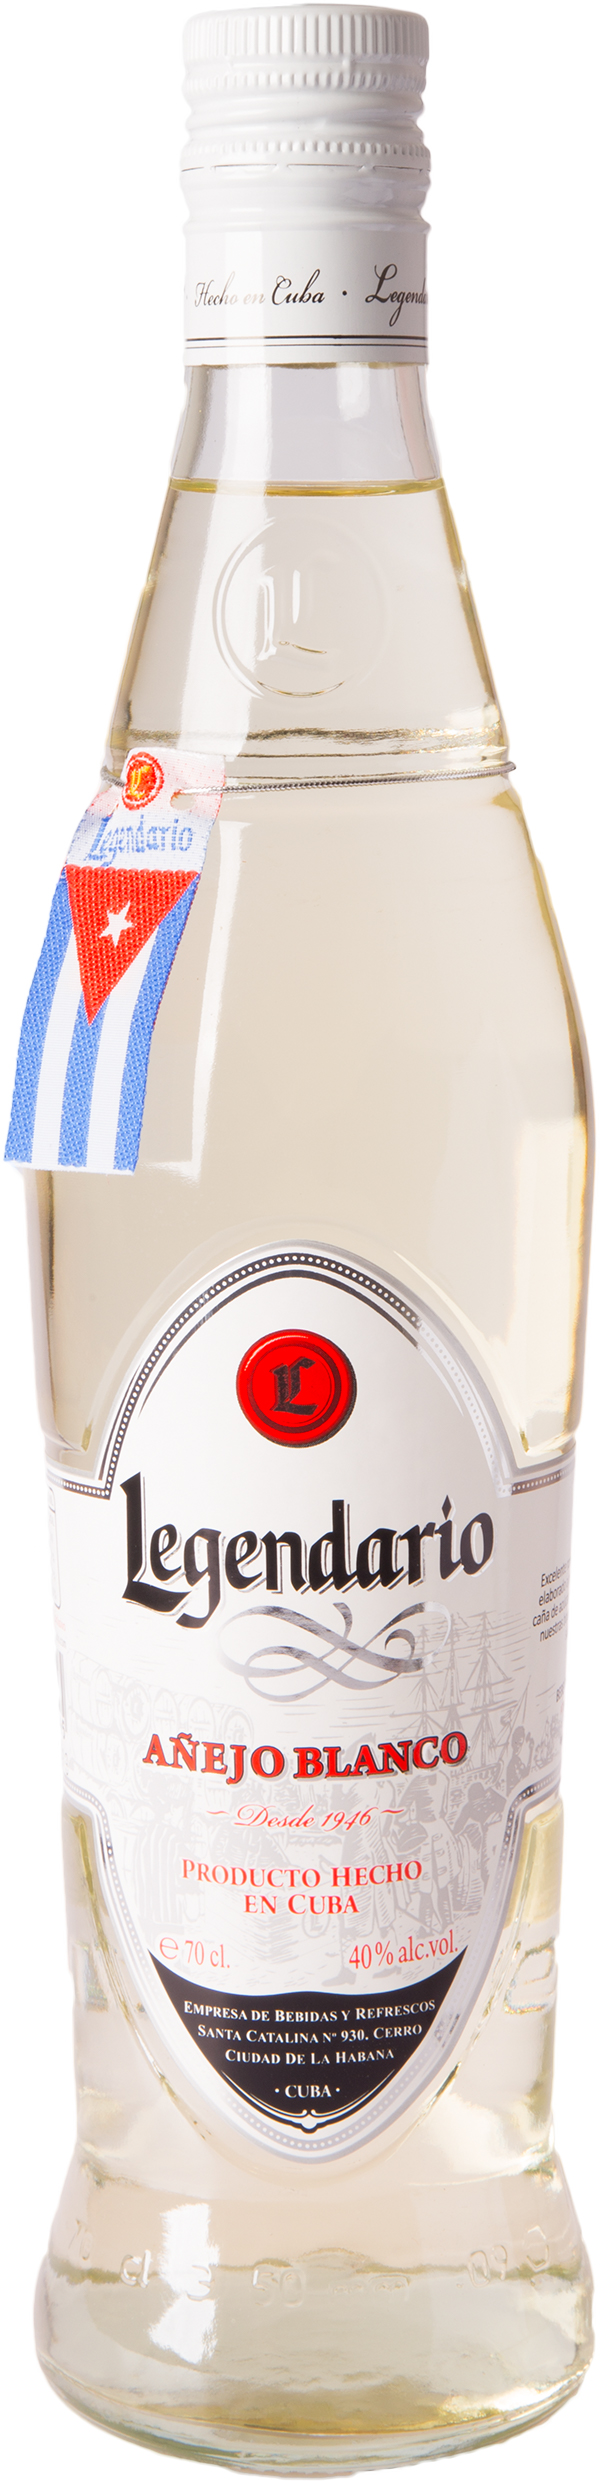 Legendario Anejo Blanco Rum 40%